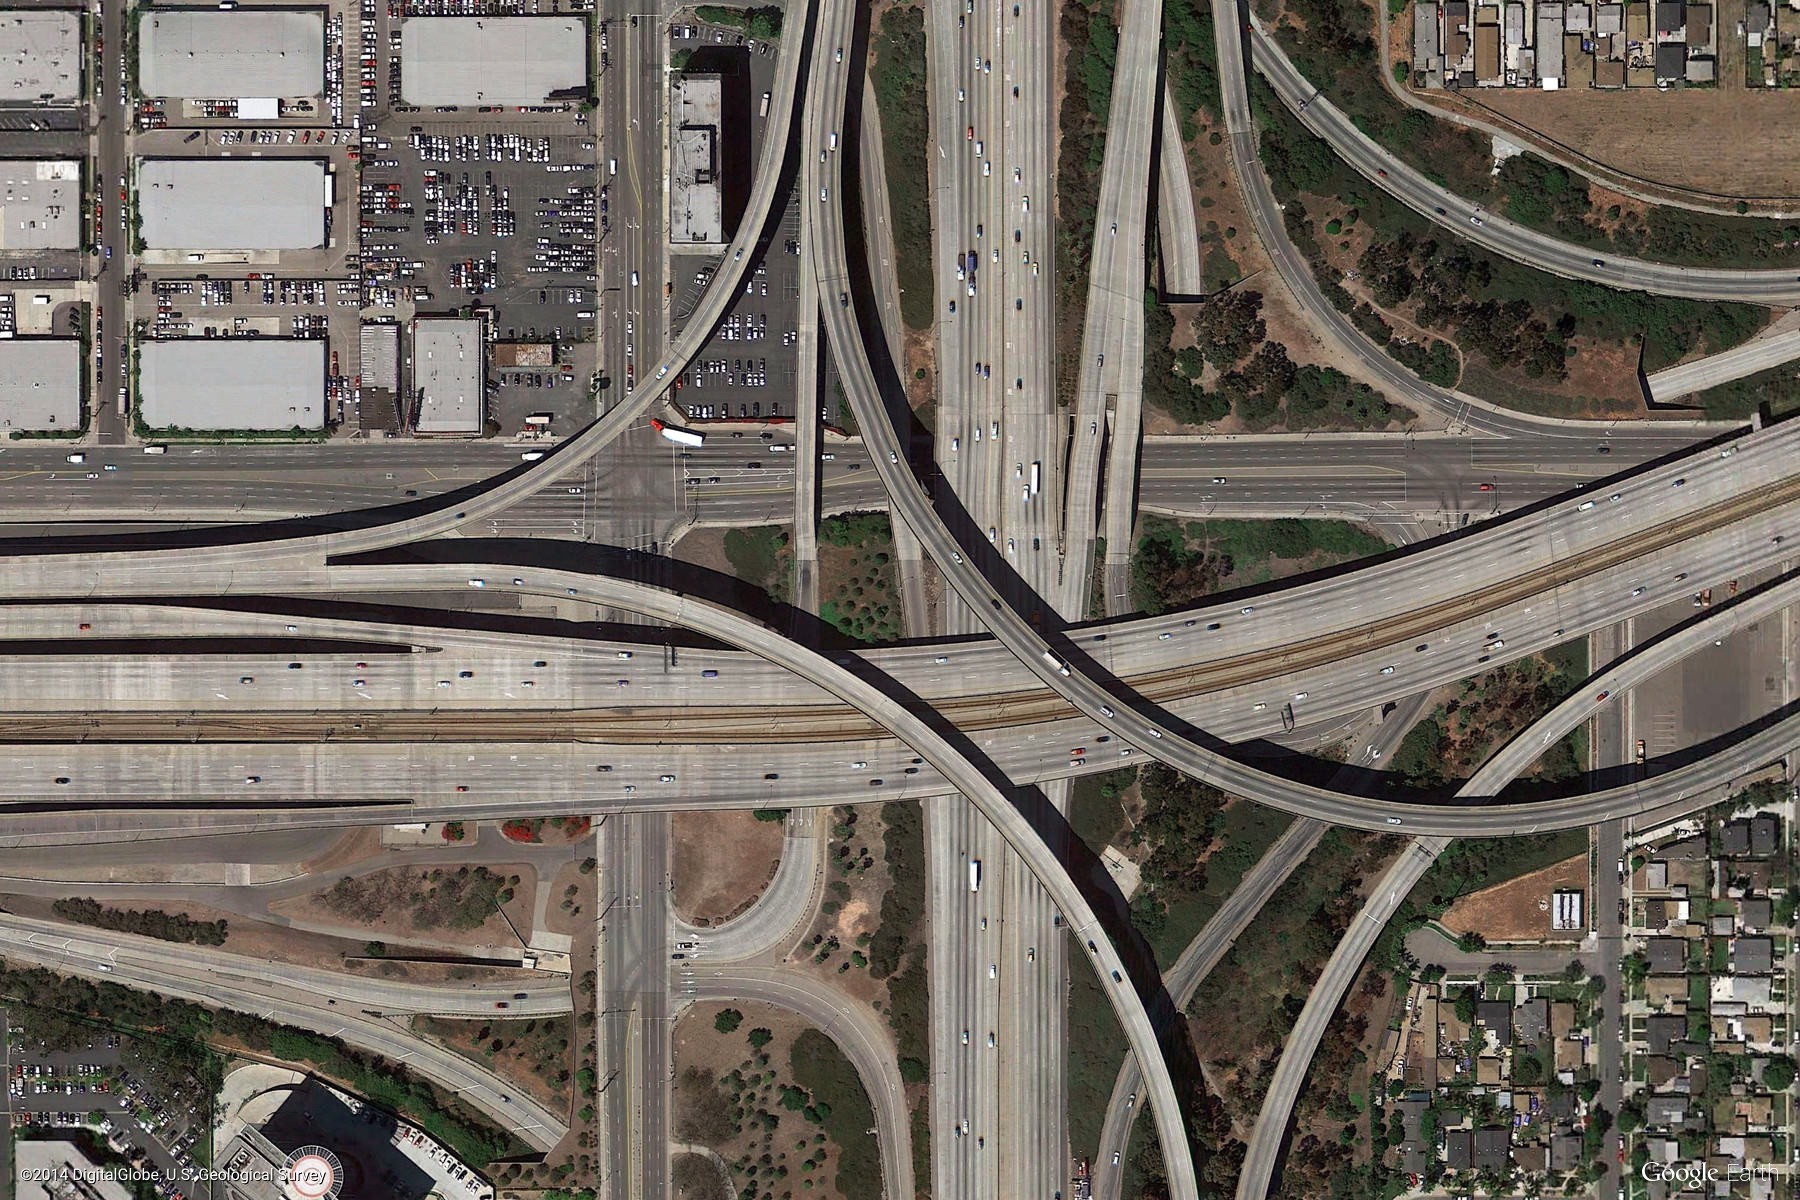 General 1800x1200 Freeway aerial view 2014 (Year)